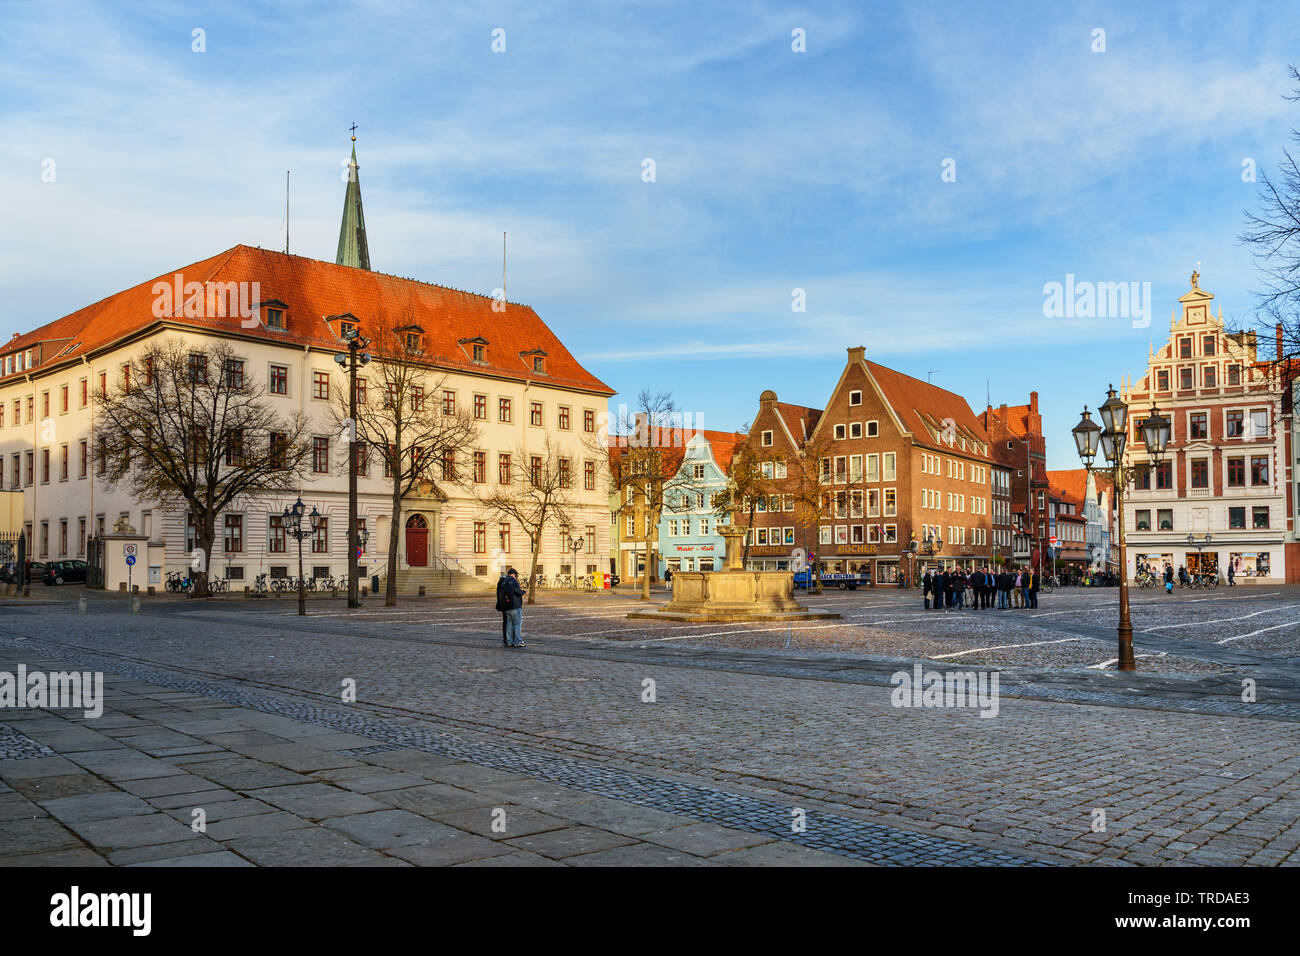 Luneburg, Germany - November 06, 2018: View of Marktplatz square in Luneburg Stock Photo